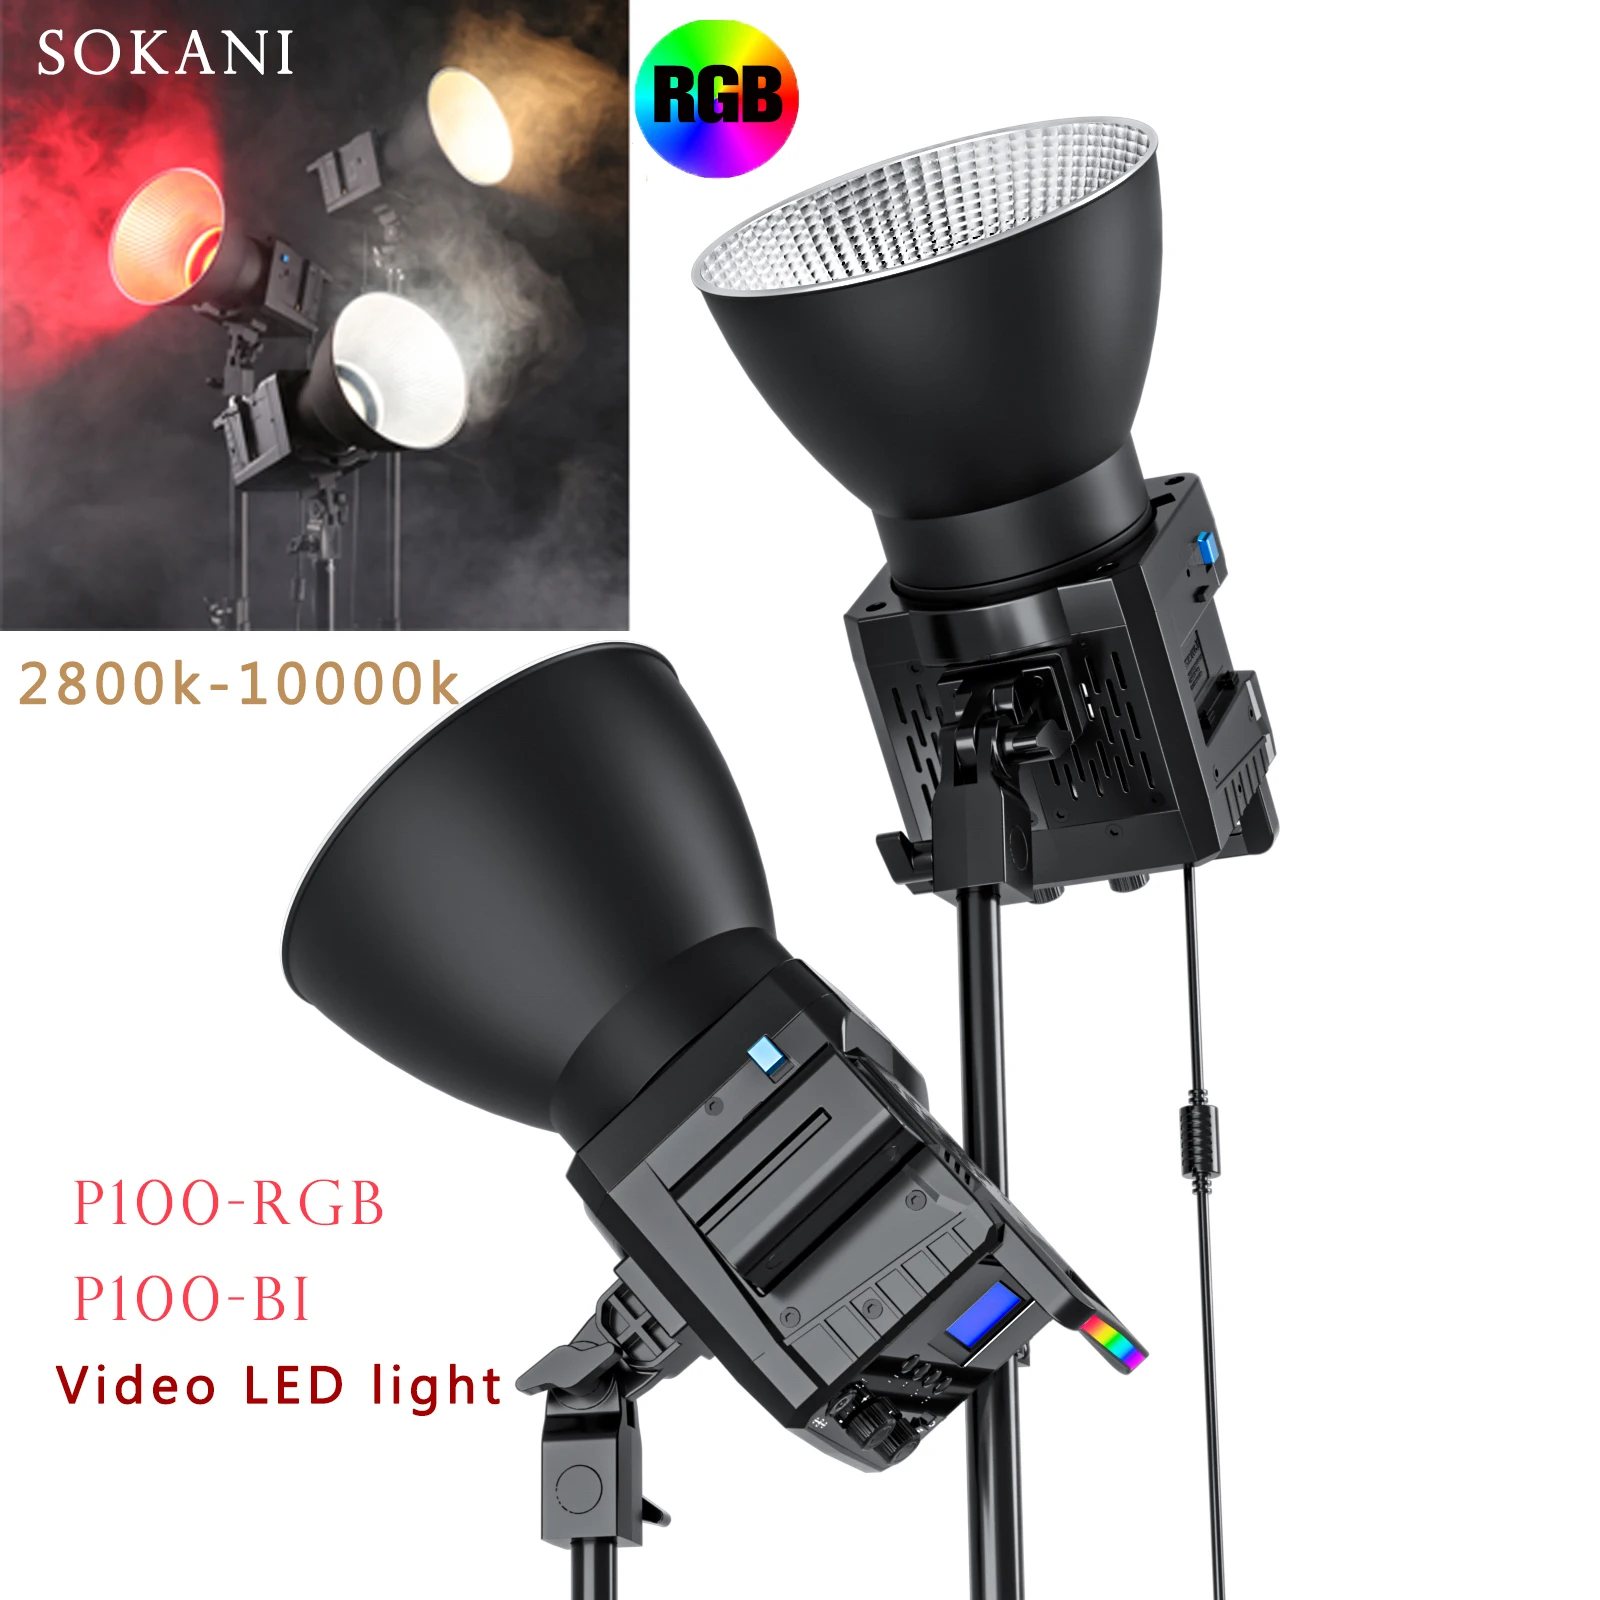 

Sokani P100-RGB/BI Outdoor Photography Lighting 2800K-10000K Bowens Mount 100W LED Video Light with APP Adjust Brightness